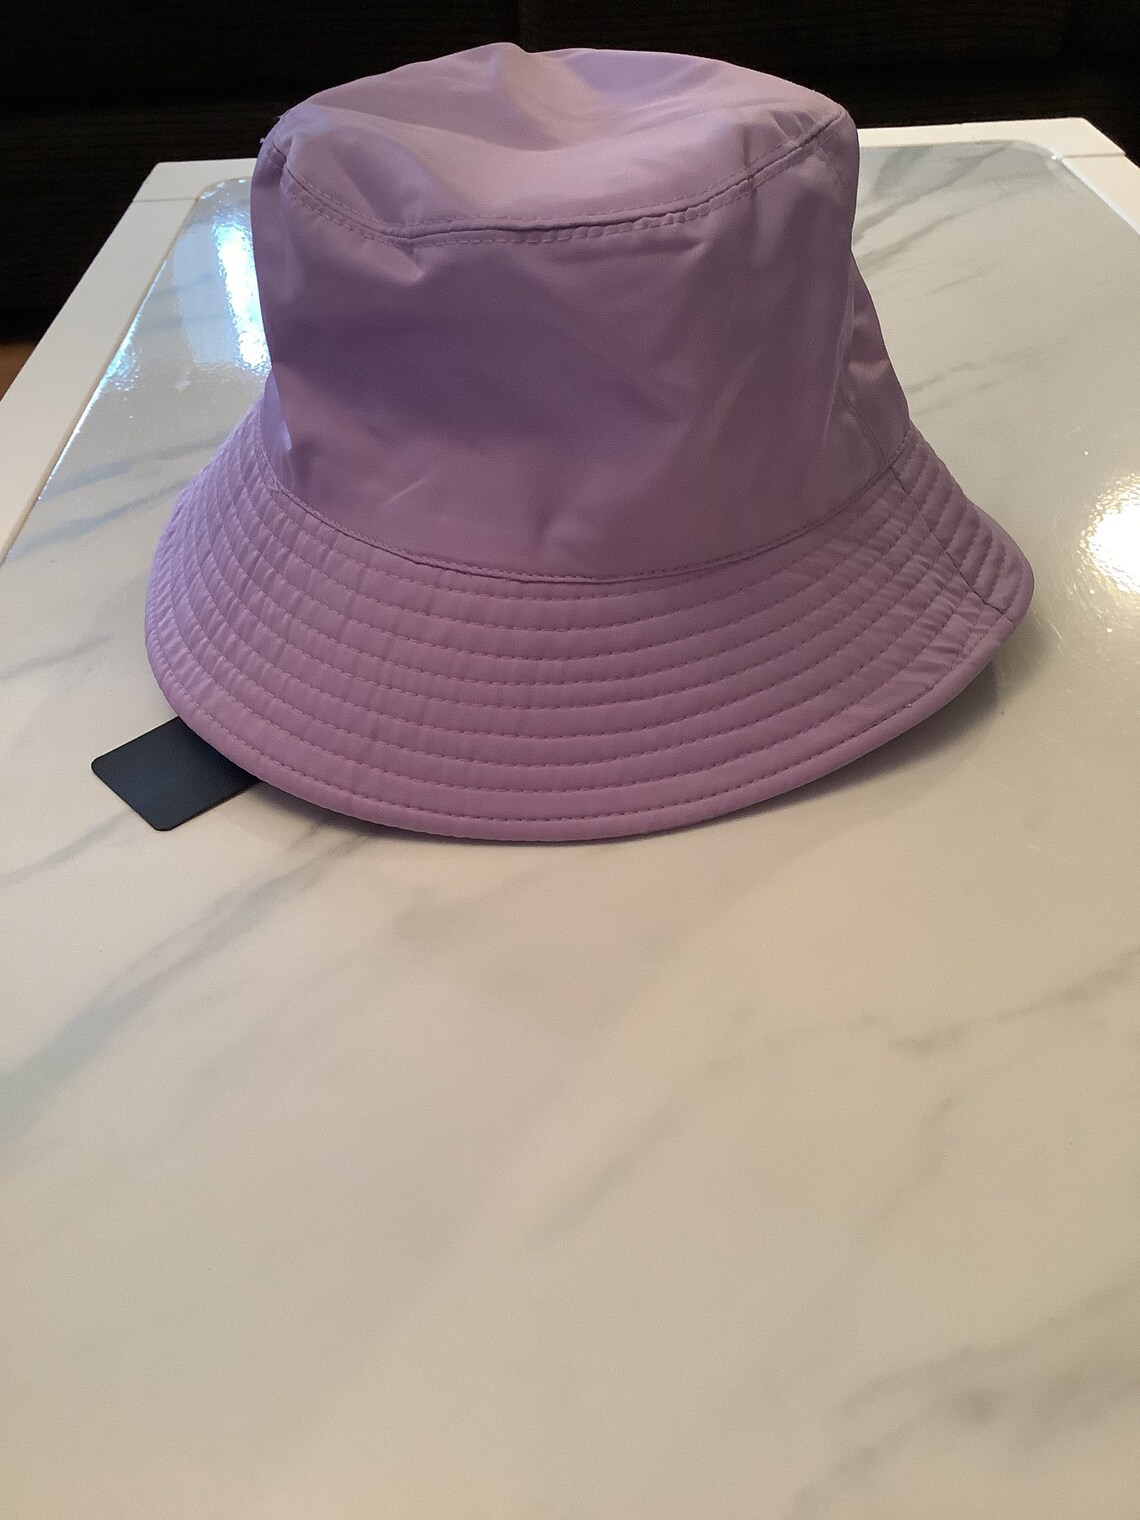 Designer lilac bucket hat | Etsy